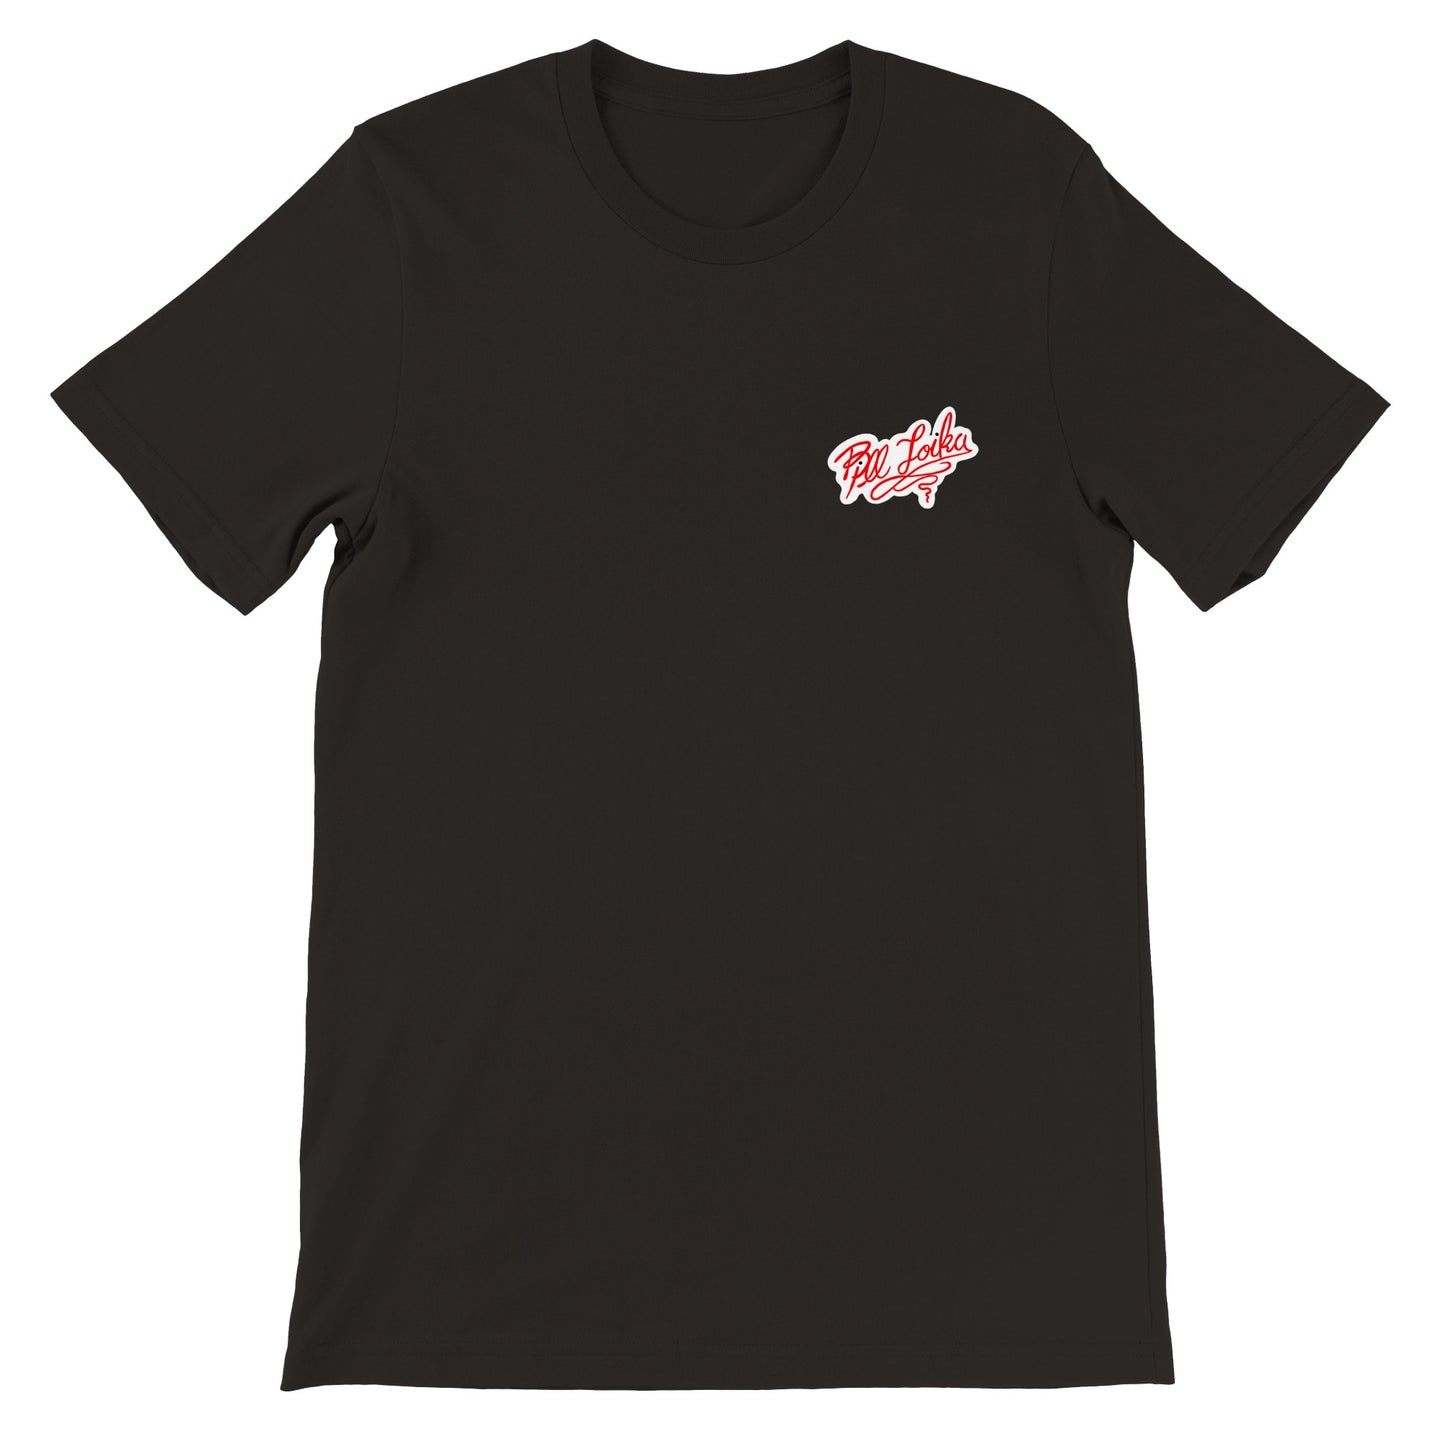 Premium "BILL LOIKA "POPPED!!" TIGER VS SNAKE" Unisex Crewneck T-shirt